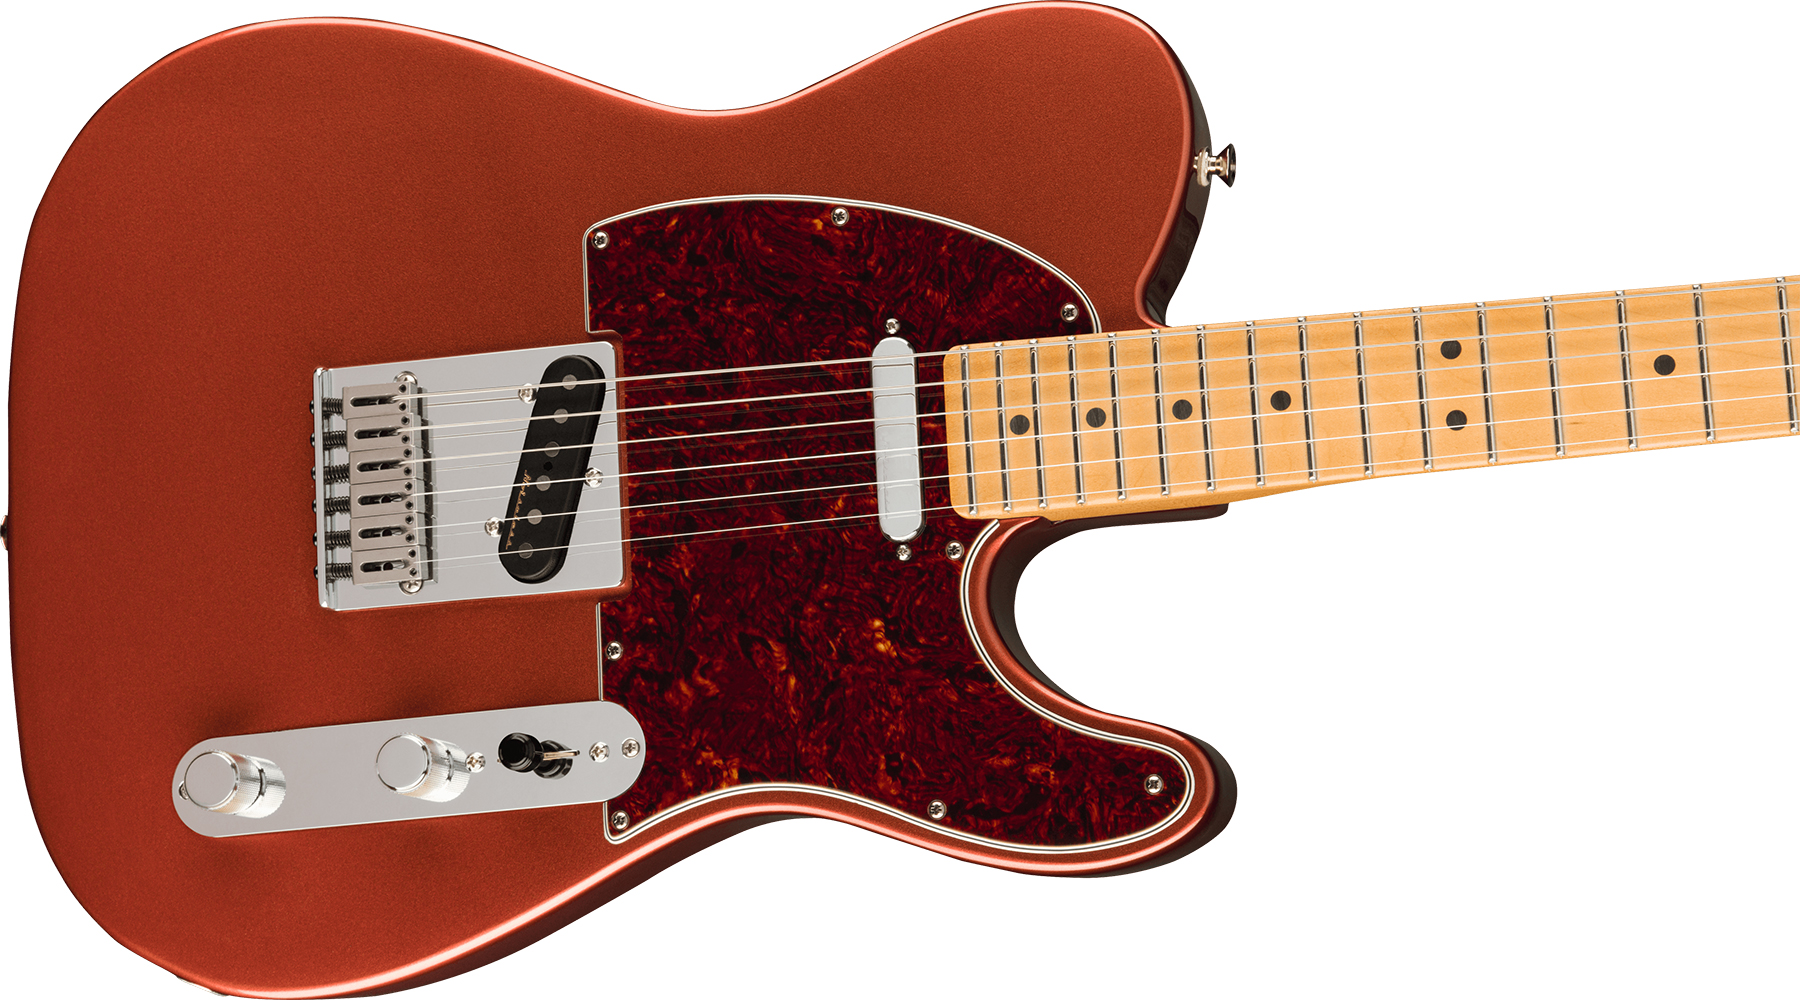 Fender Tele Player Plus Mex 2s Ht Mn - Aged Candy Apple Red - Guitarra eléctrica con forma de tel - Variation 2